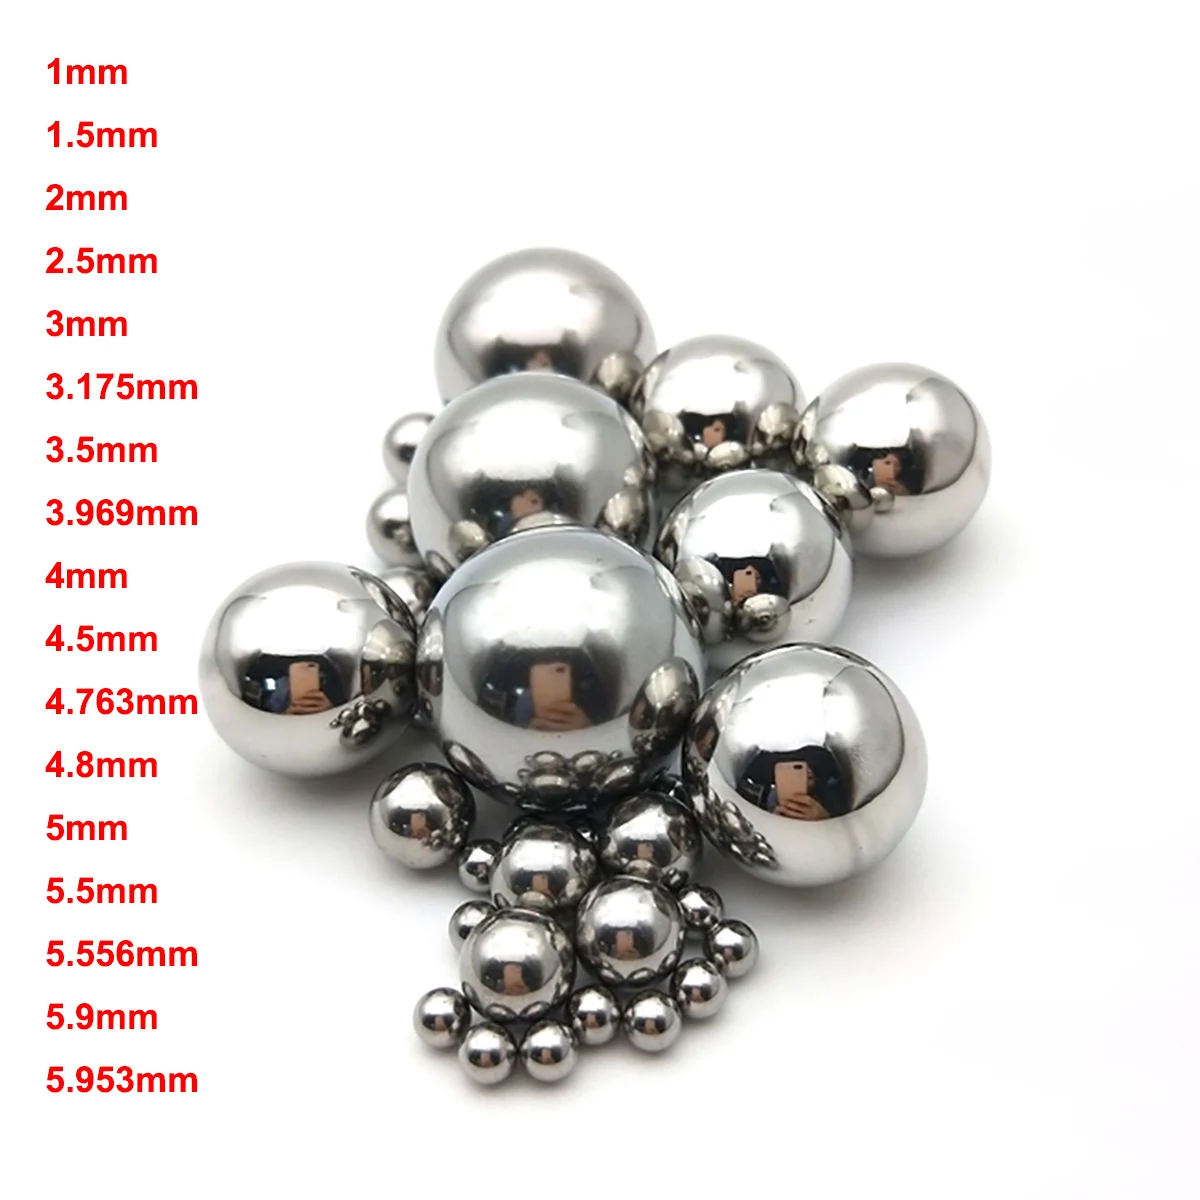 100pcs 1mm-5.953mm High Precision Bearing Balls GCR15 Bearing Steel Smooth Solid Ball for Linear Slider Ball Screw Ball Bearing